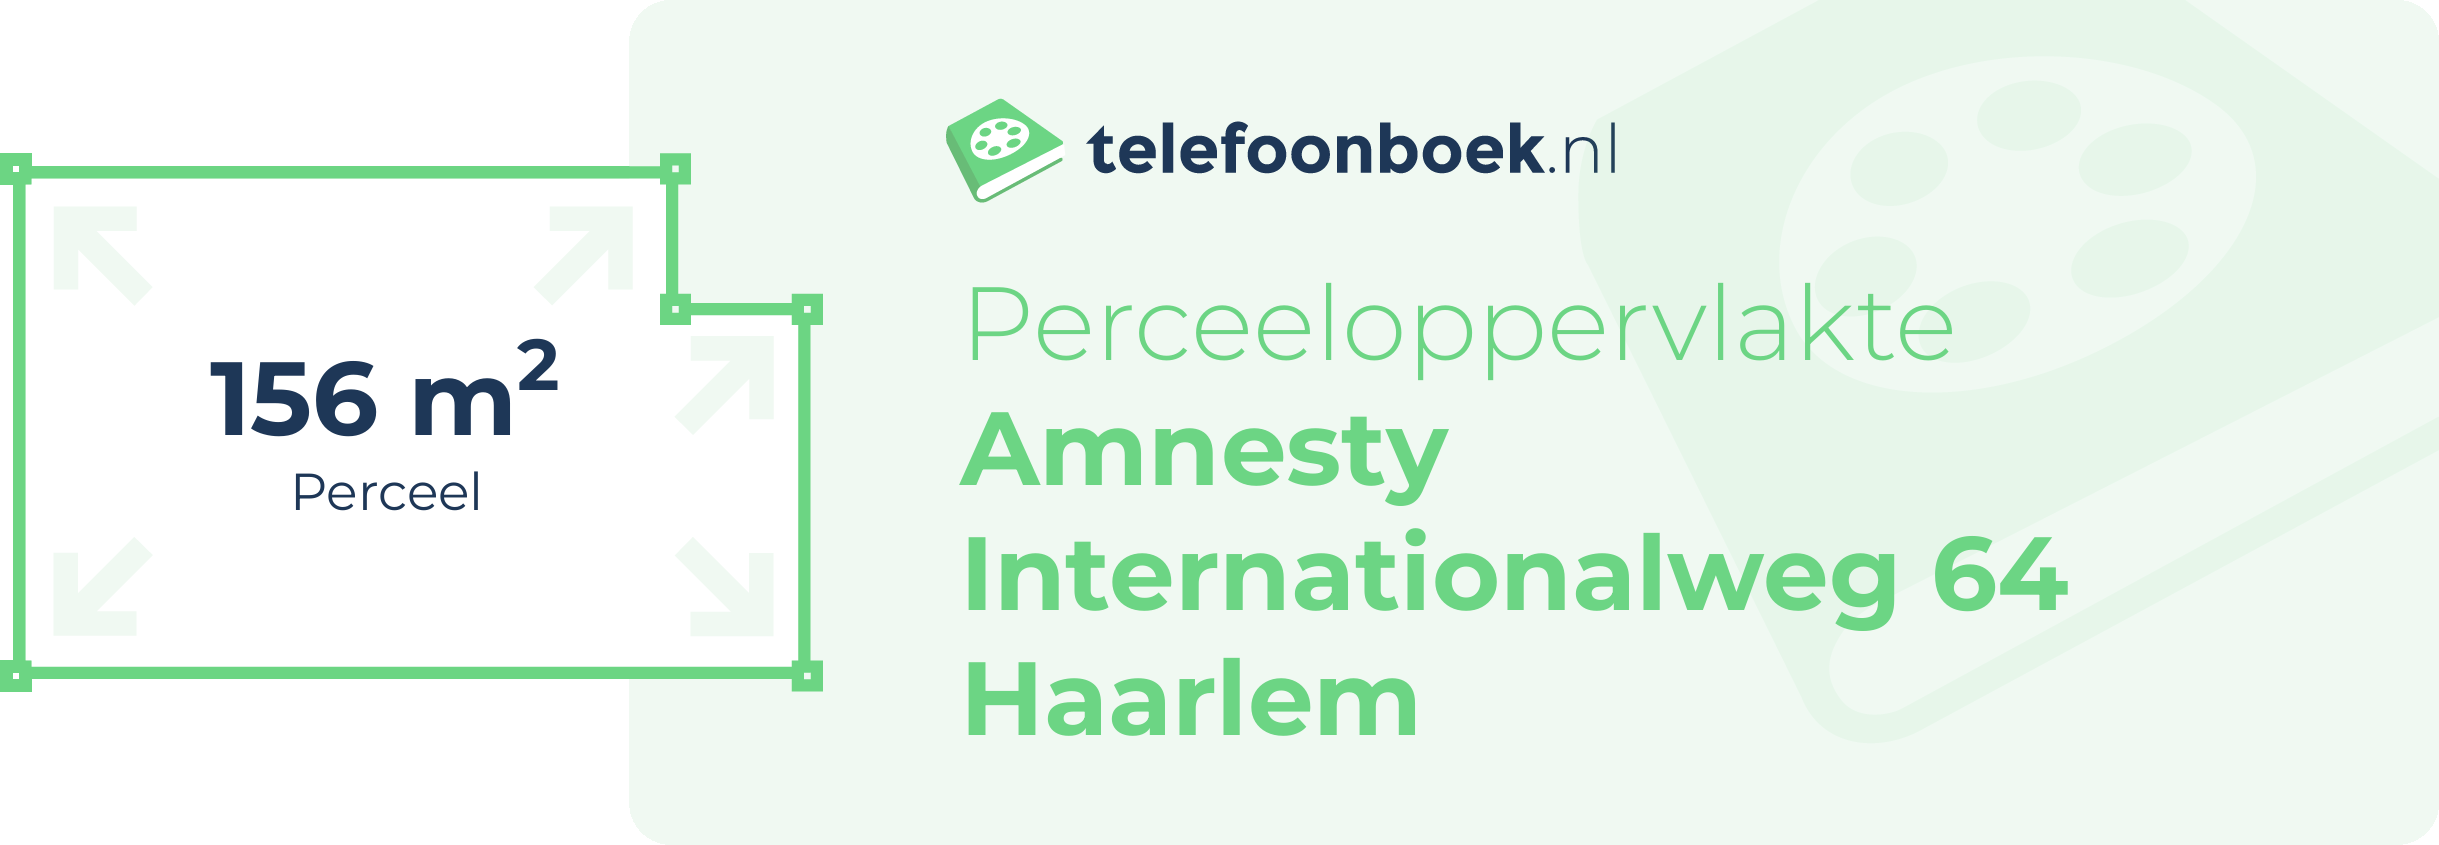 Perceeloppervlakte Amnesty Internationalweg 64 Haarlem